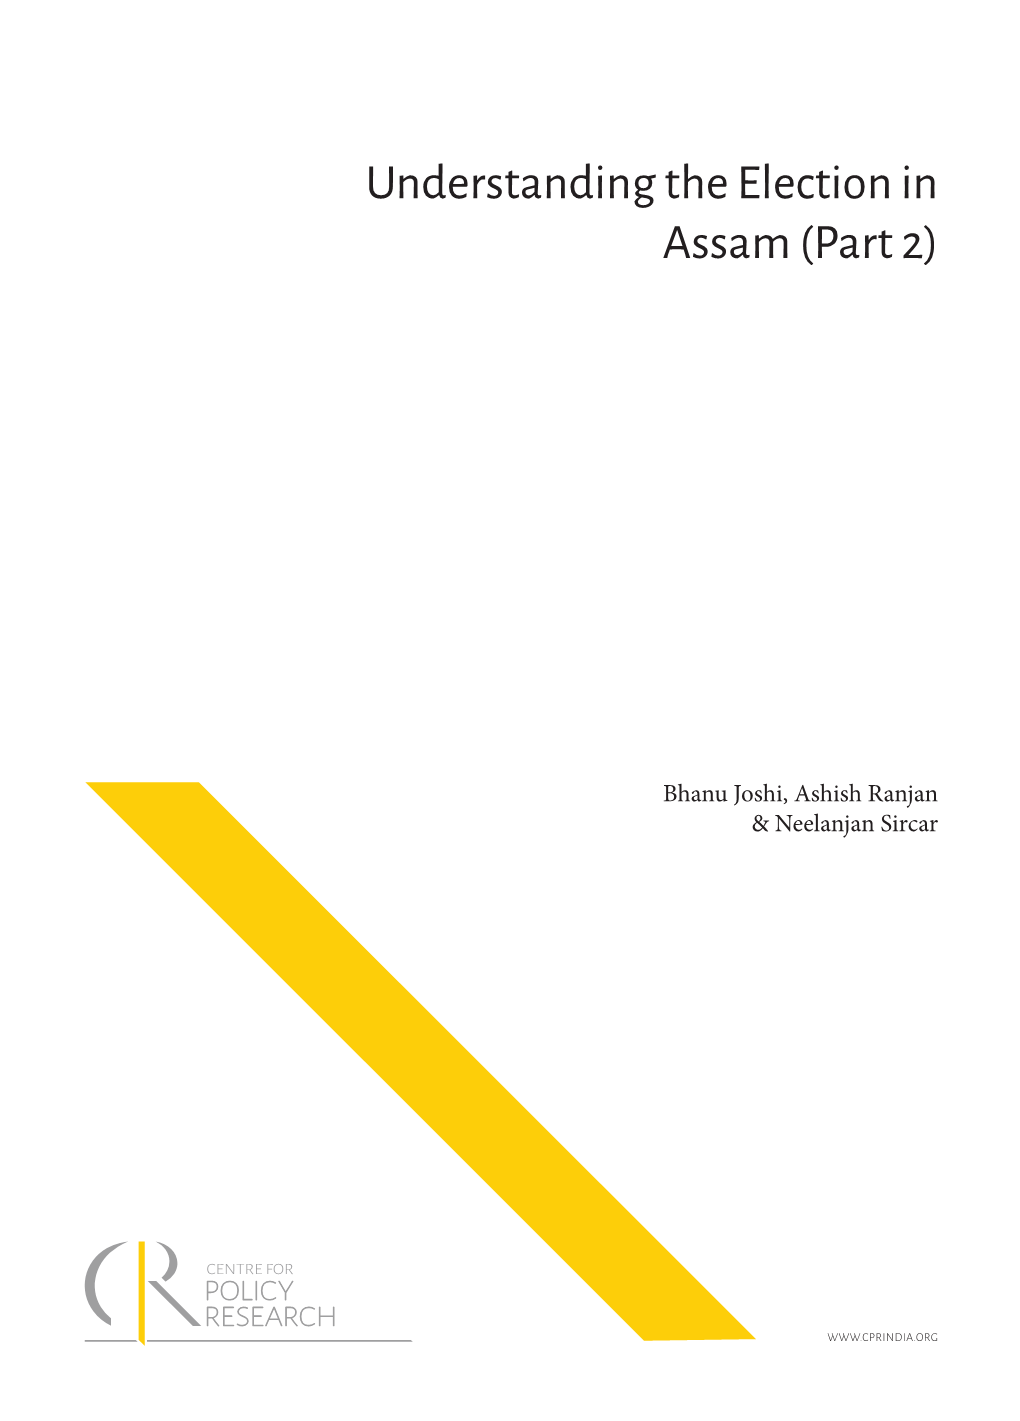 Understanding the Election in Assam (Part 2)